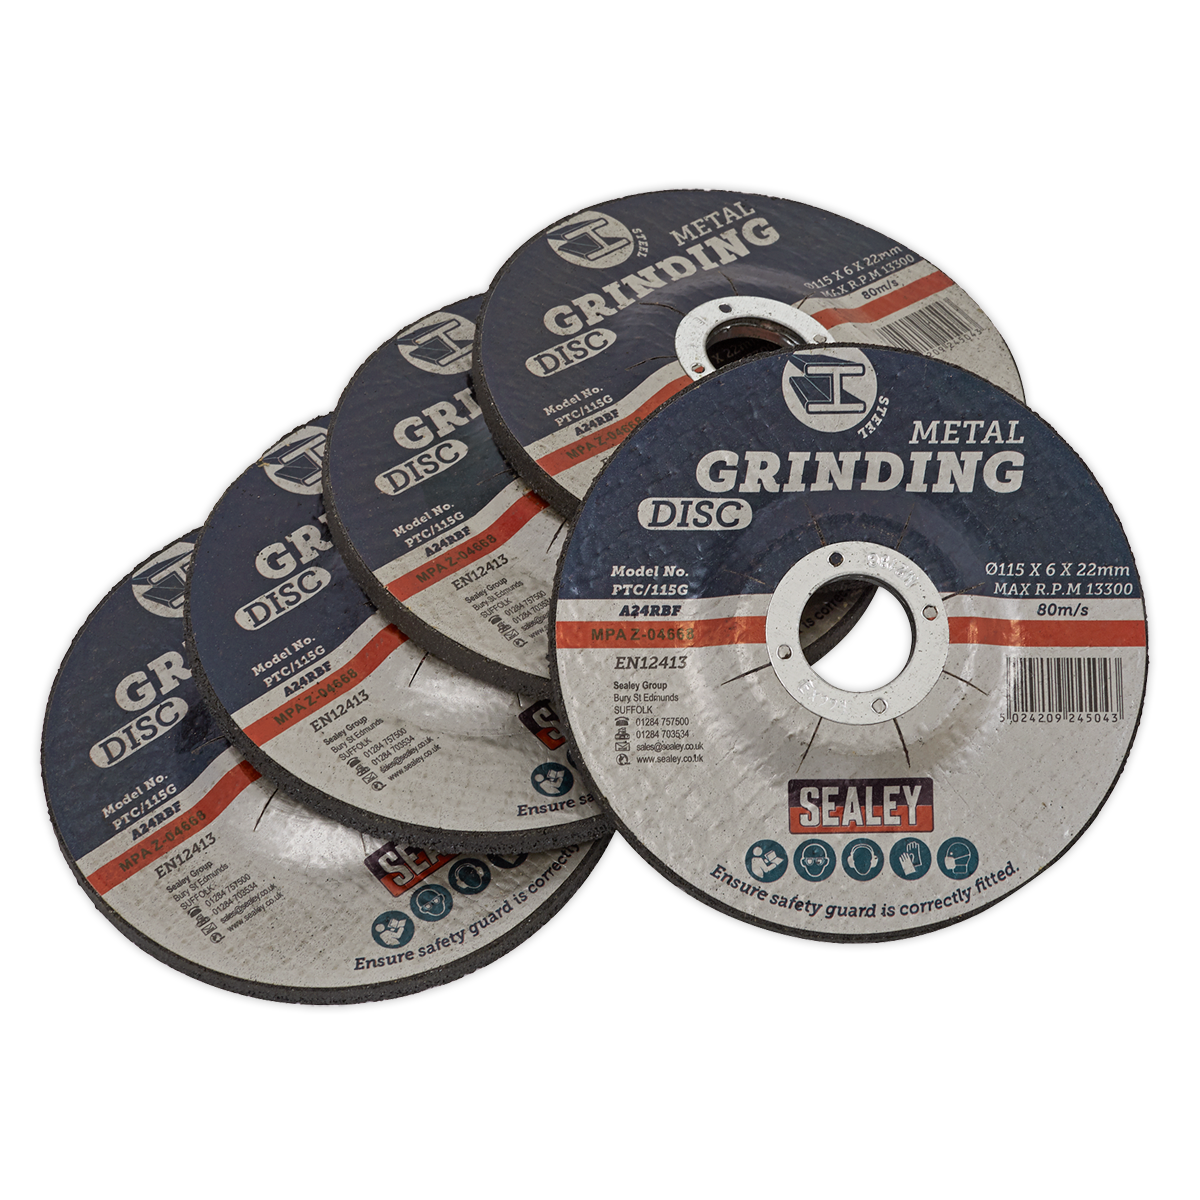 Sealey Grinding Disc Ø115 x 6mm Ø22mm Bore - Pack of 5